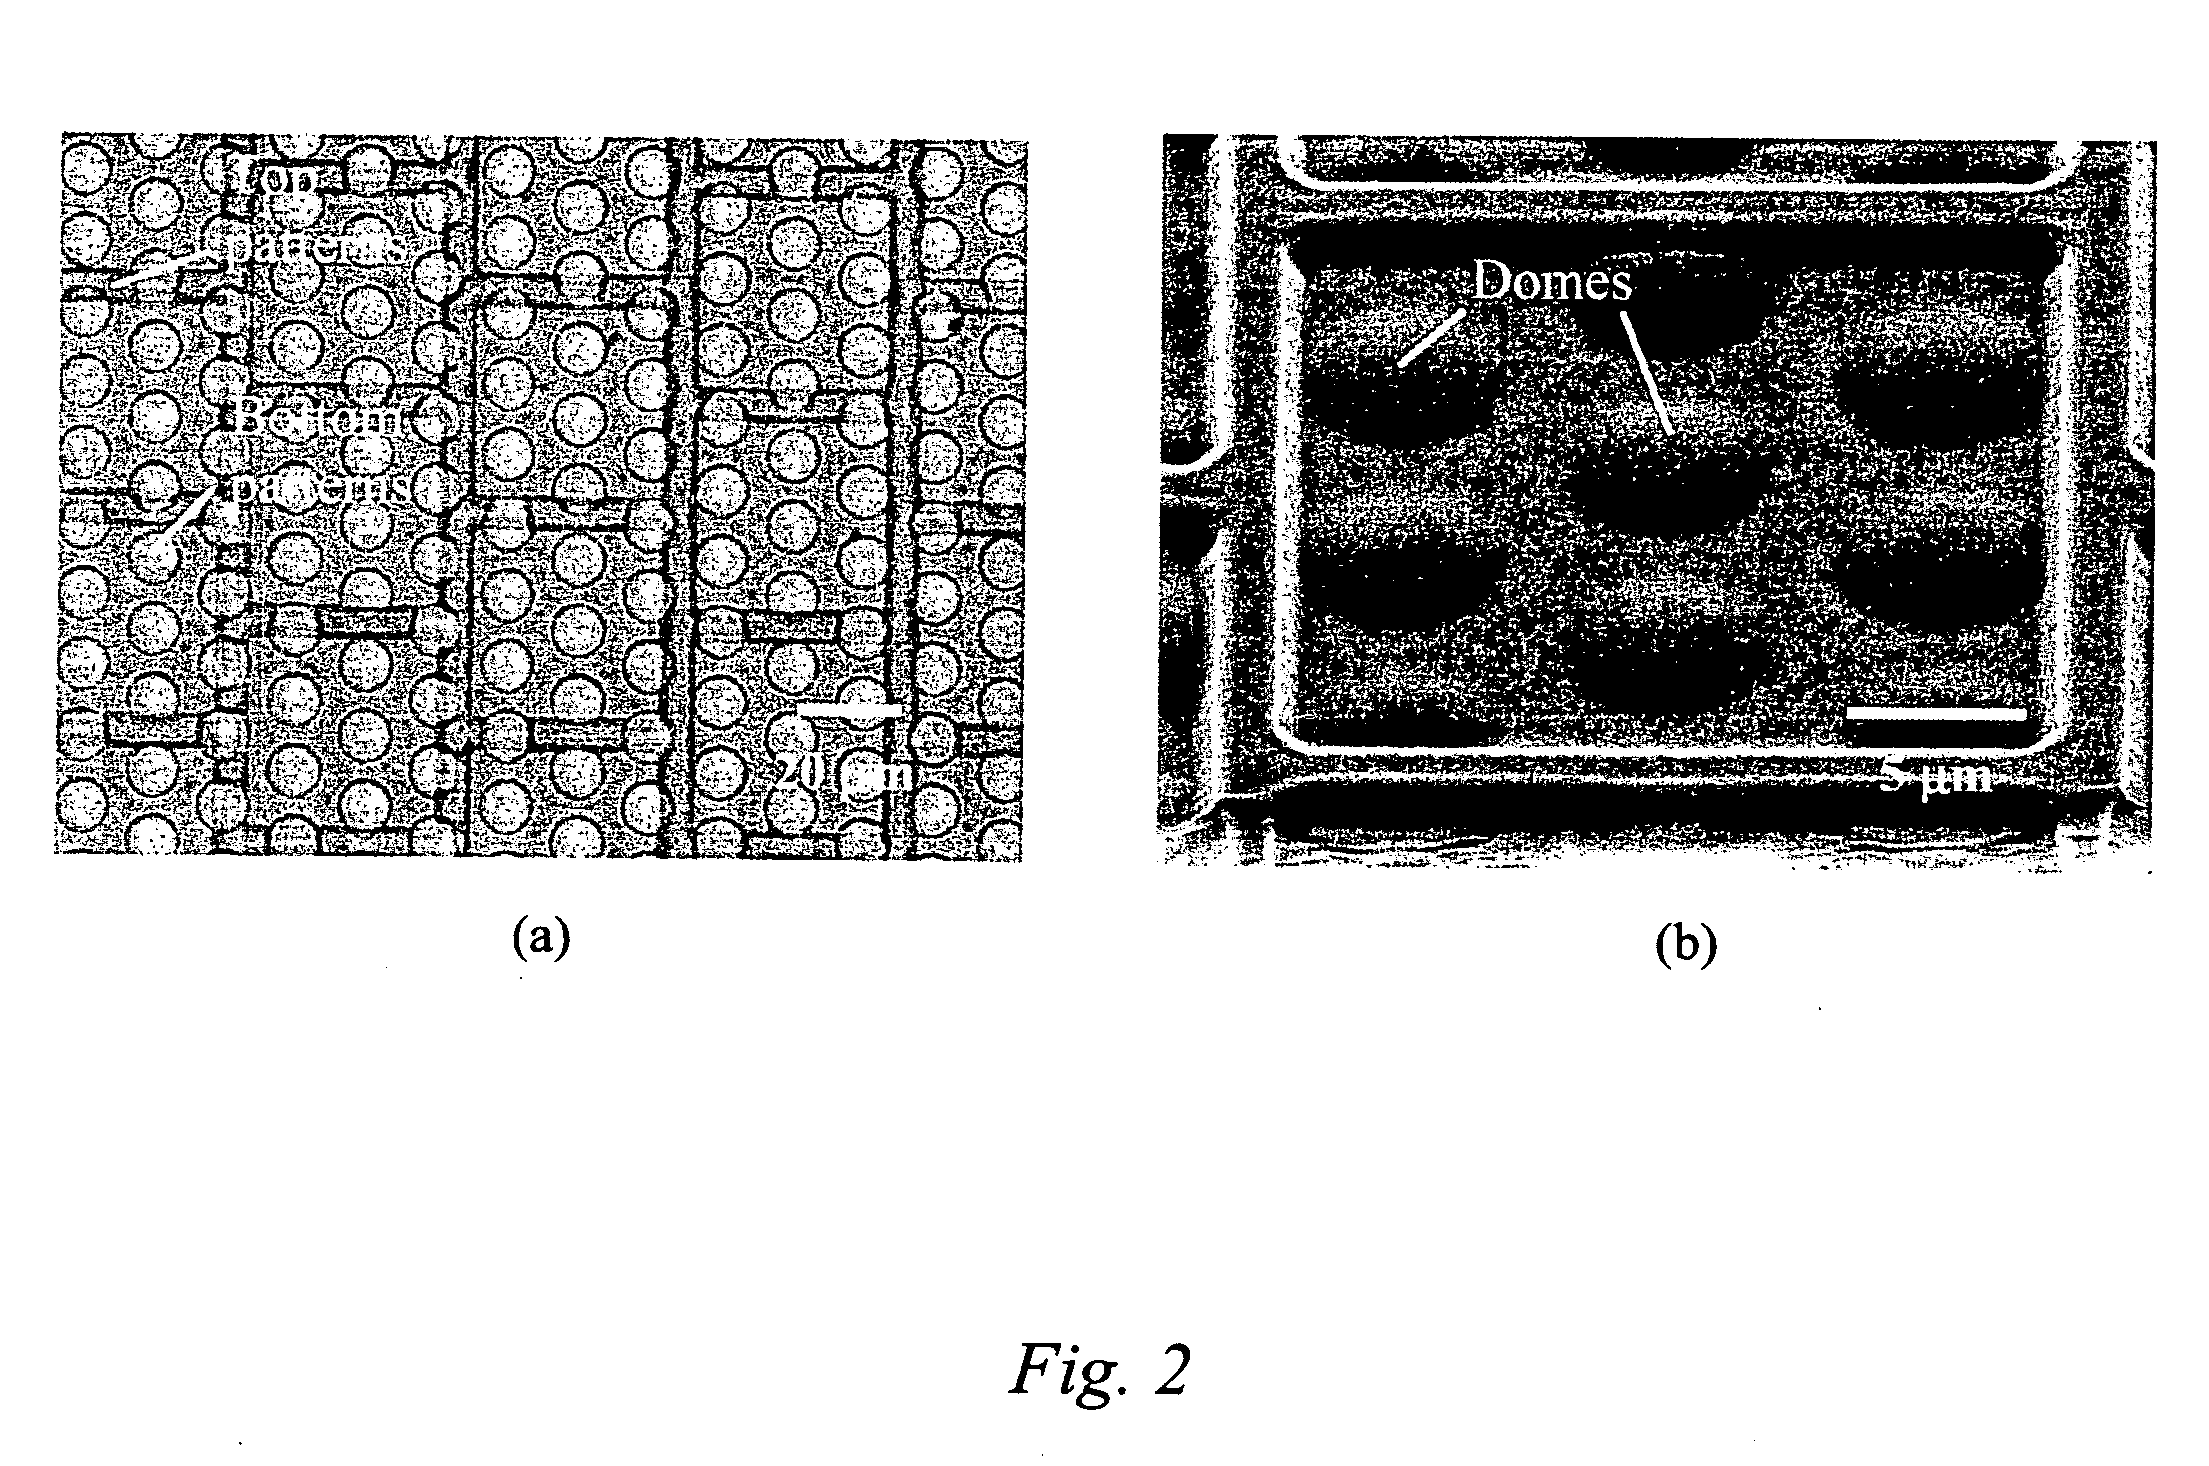 Method of imprinting shadow mask nanostructures for display pixel segregation